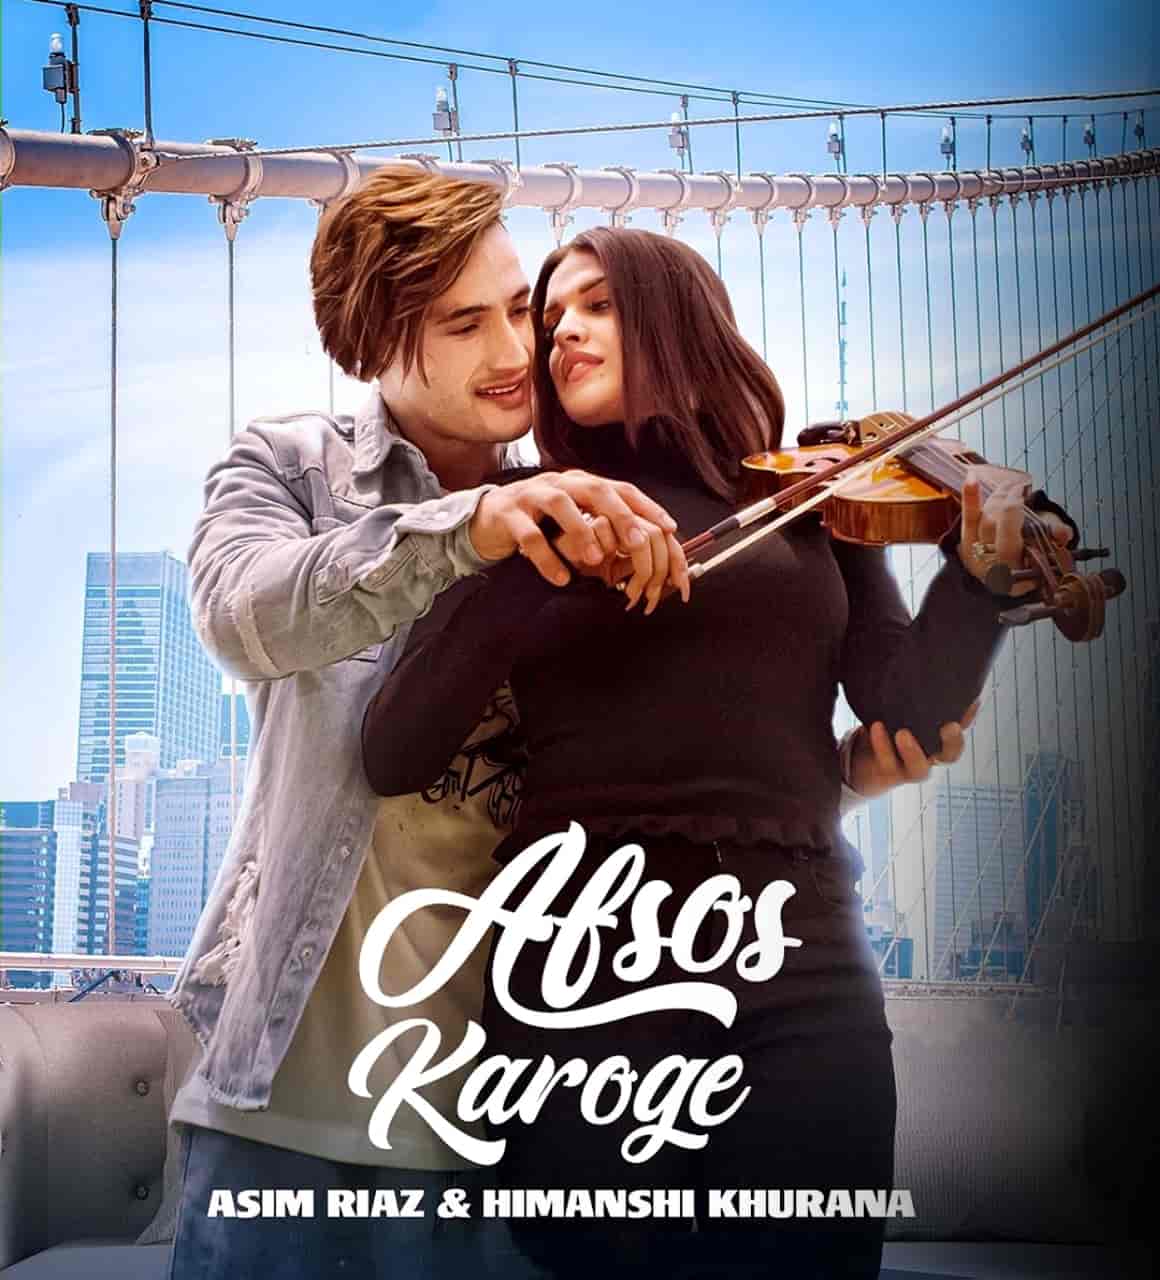 Afsos Karoge Hindi Love Song Image Features Asim Riaz and Himanshi Khurana sung by Stebin Ben